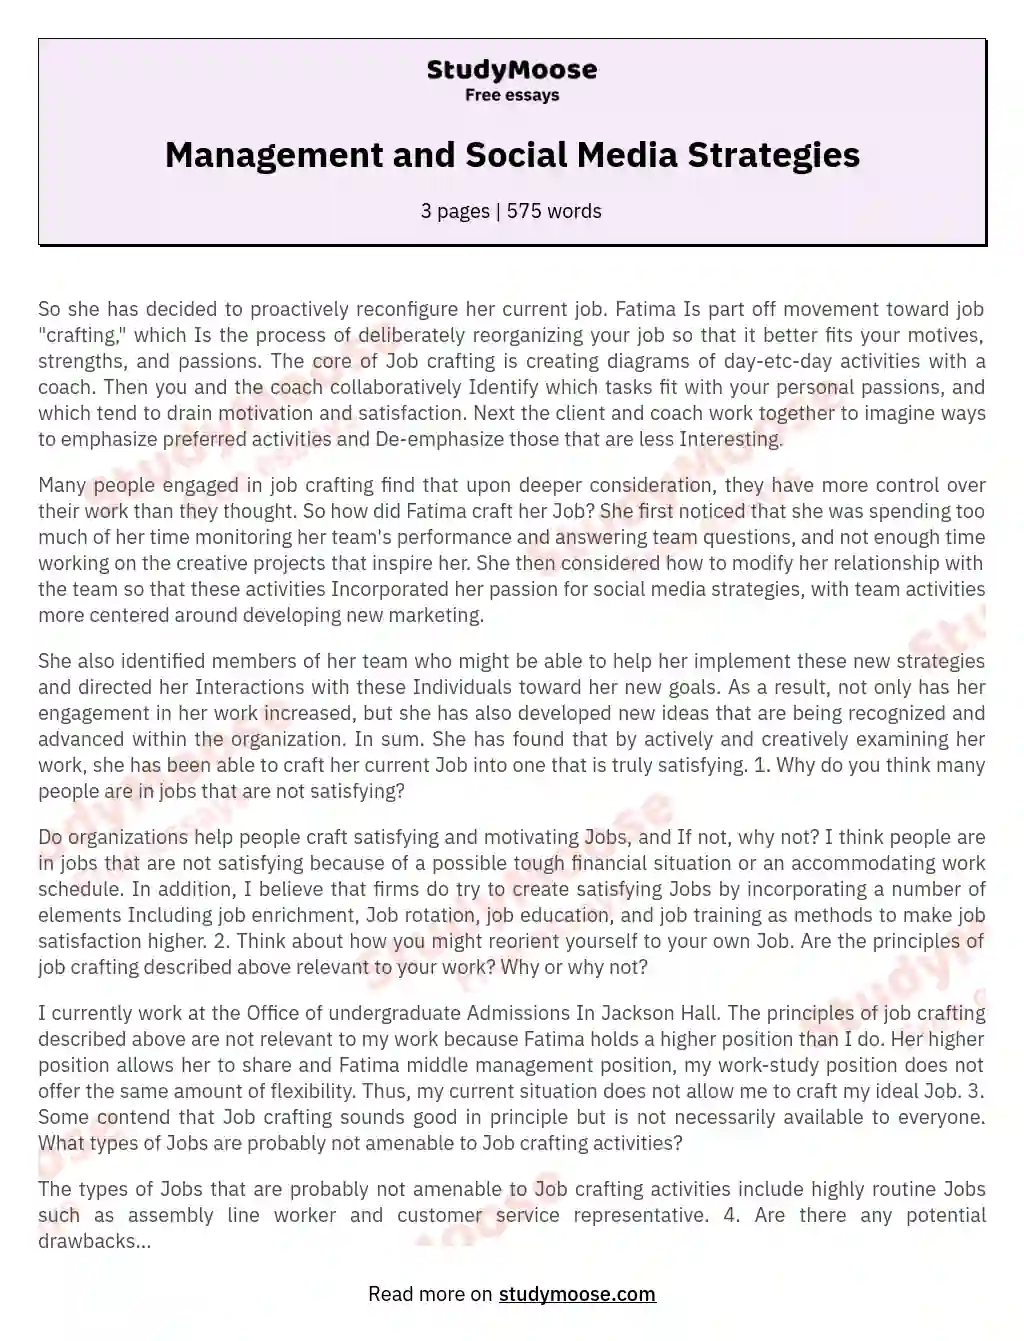 Management and Social Media Strategies essay